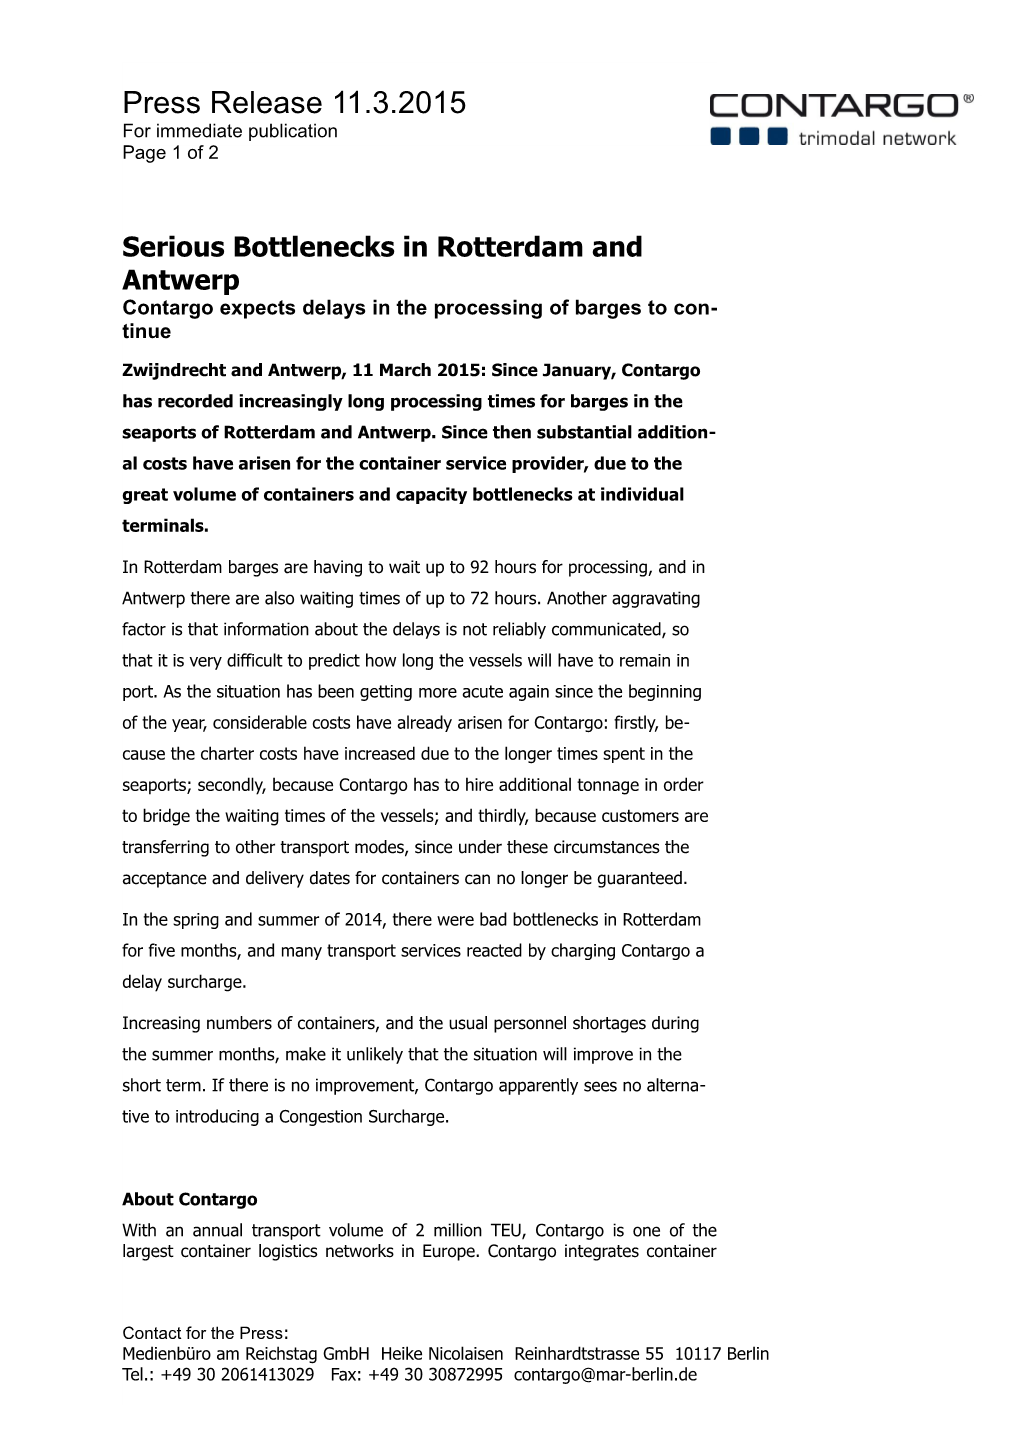 Serious Bottlenecks in Rotterdam and Antwerp